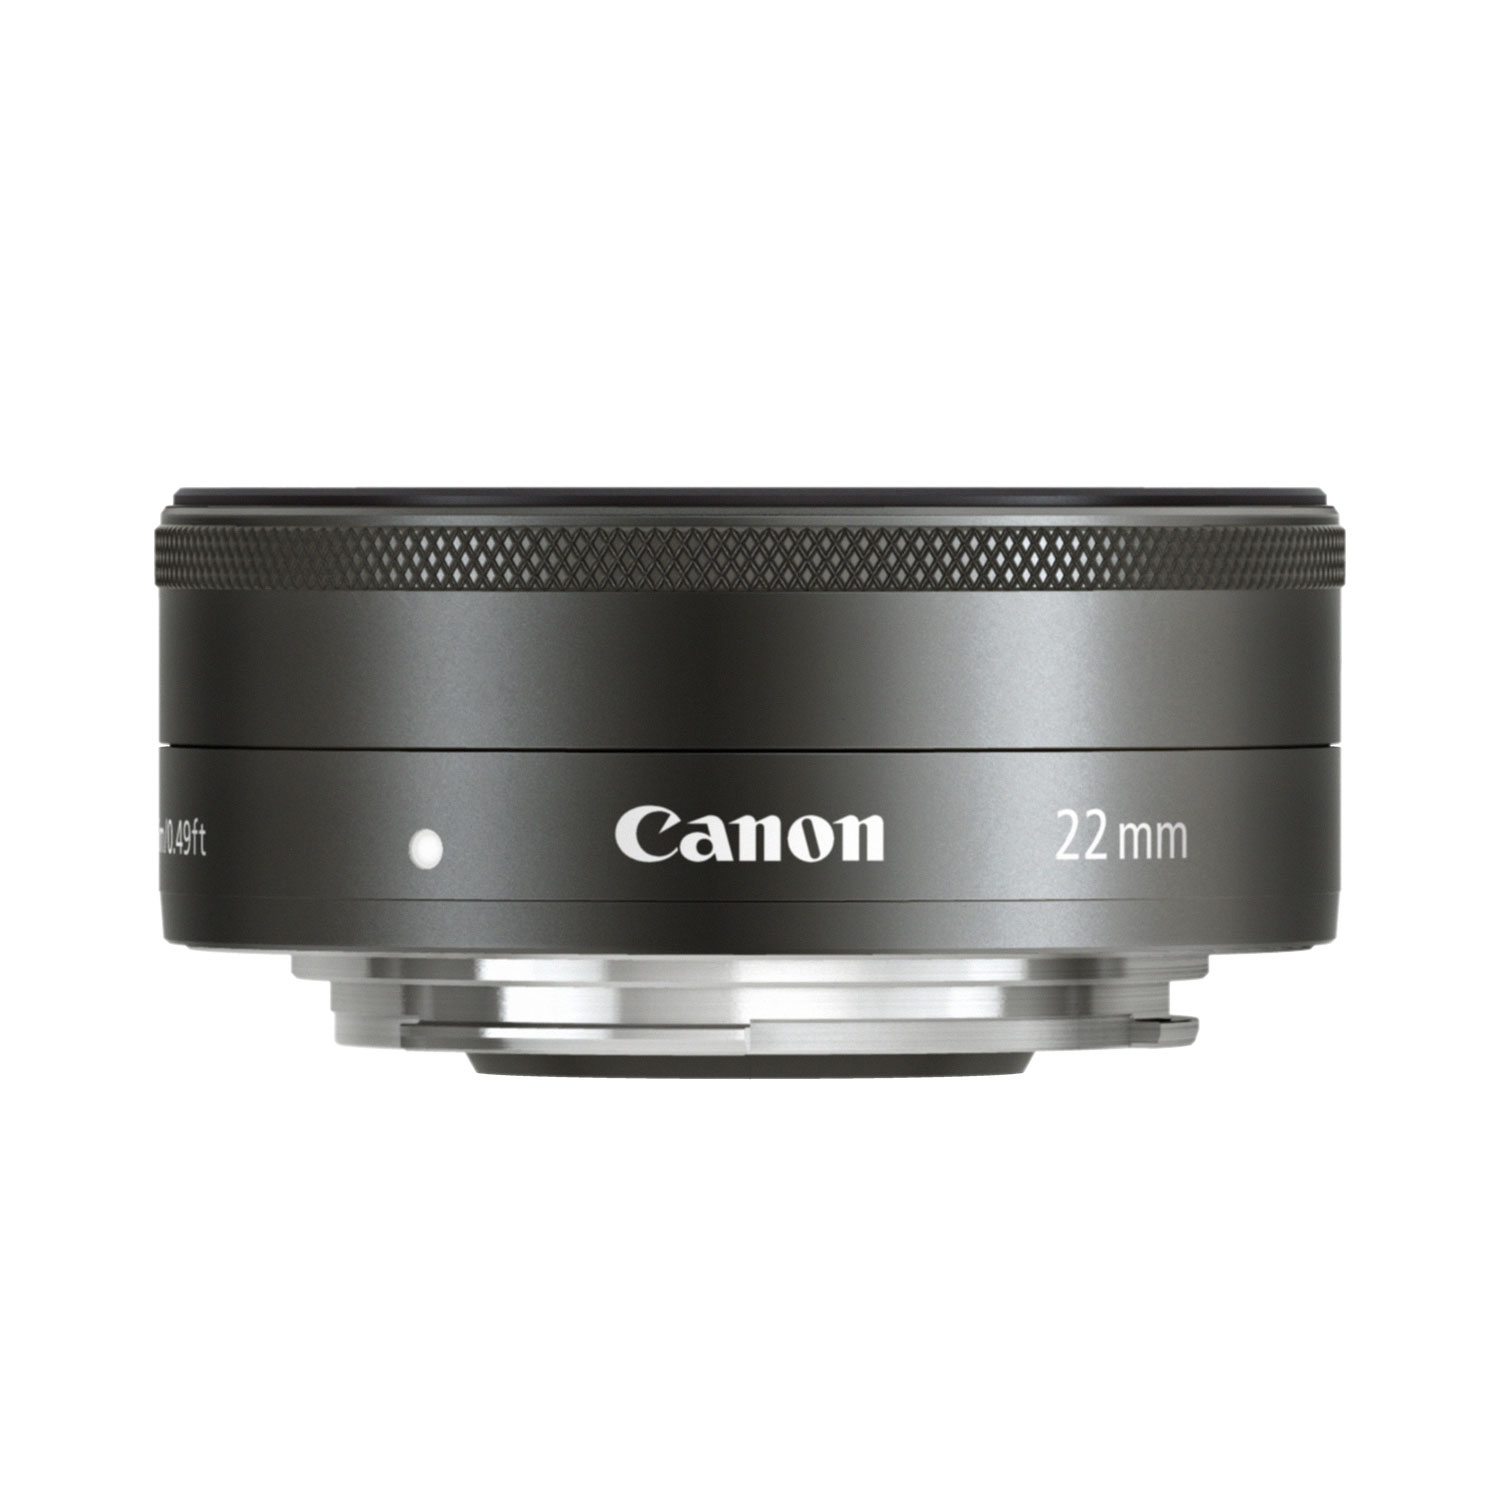 Canon EF-M 22mm f/2 STM Lens - Black | Best Buy Canada